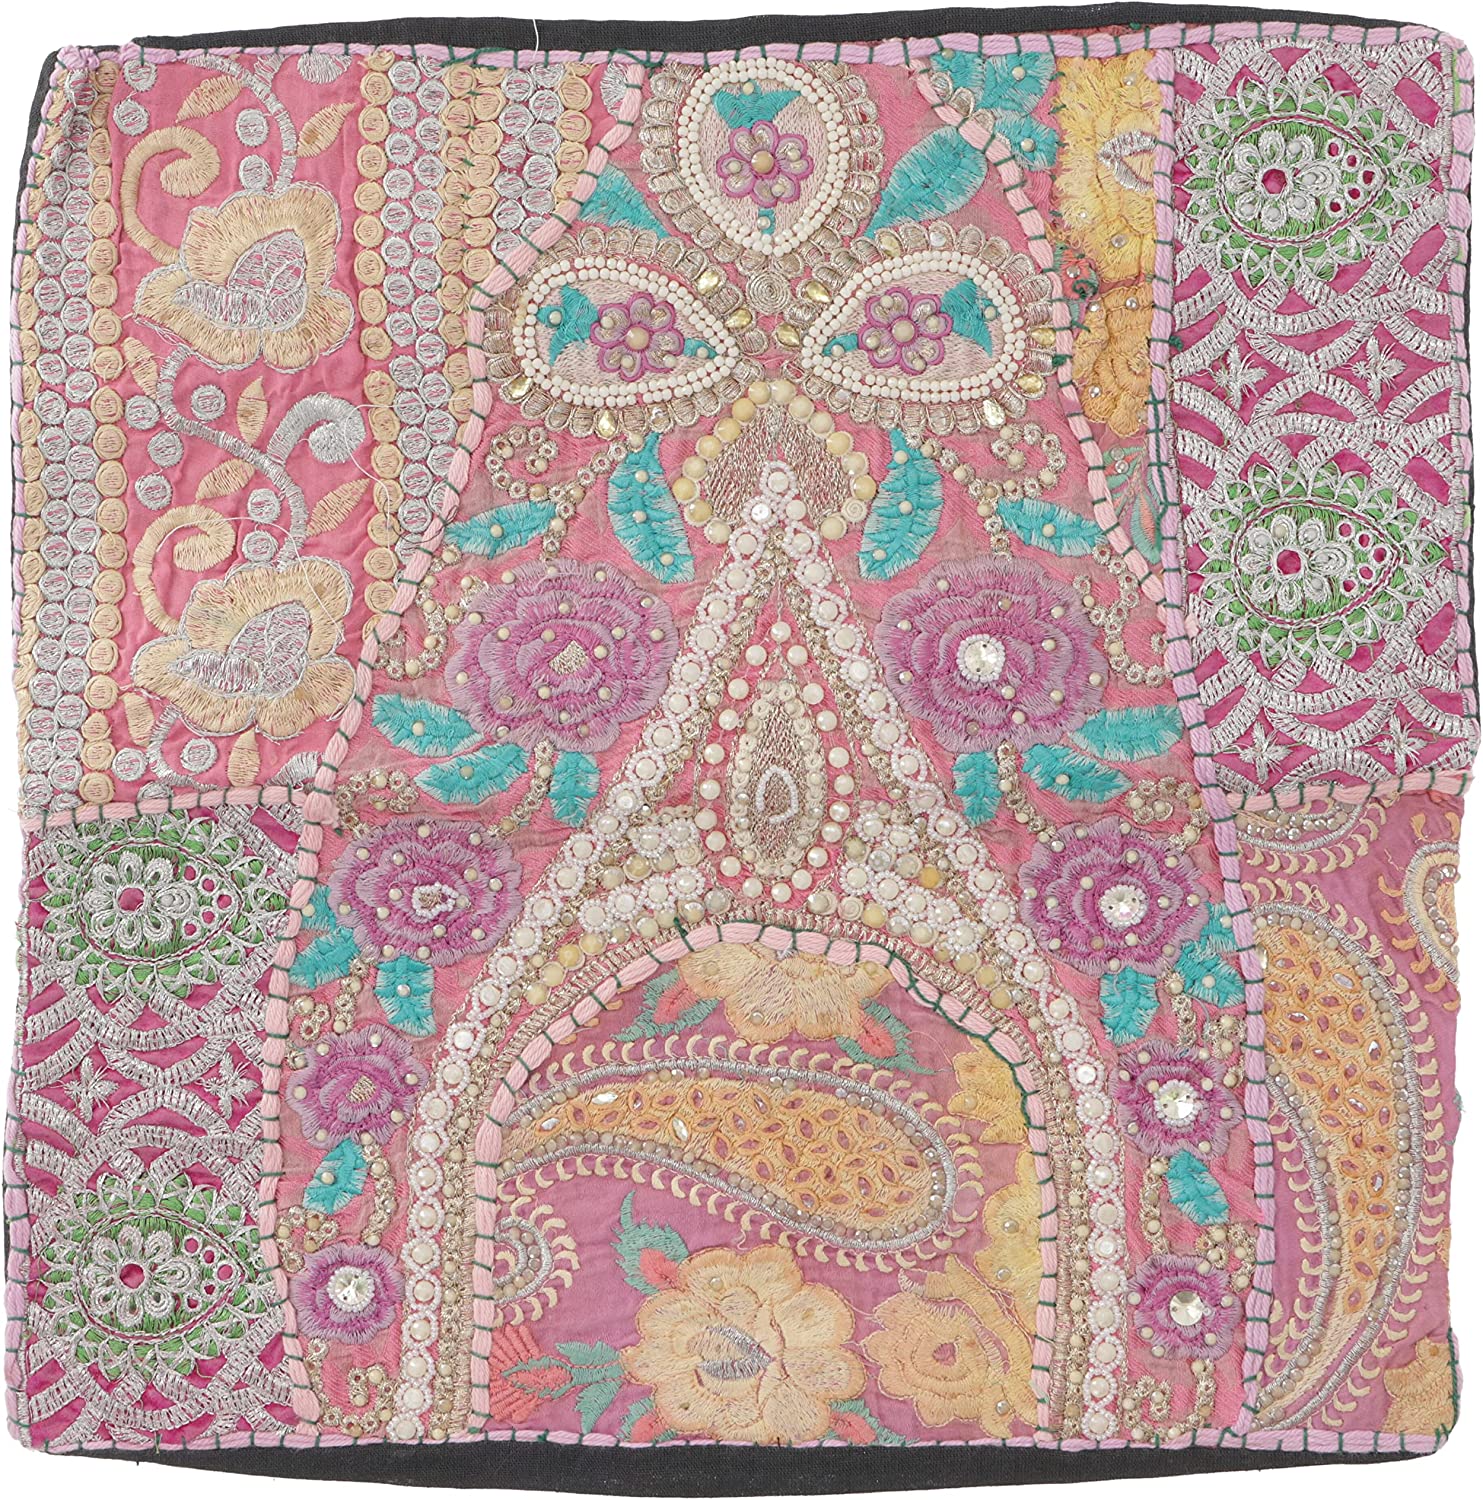 Guru-Shop GURU SHOP Patchwork cushion cover, decorative cushion cover made of Rajasthan, single piece, pattern 48, beige, cotton, 40 x 40 cm, decorative cushion, sofa cushion